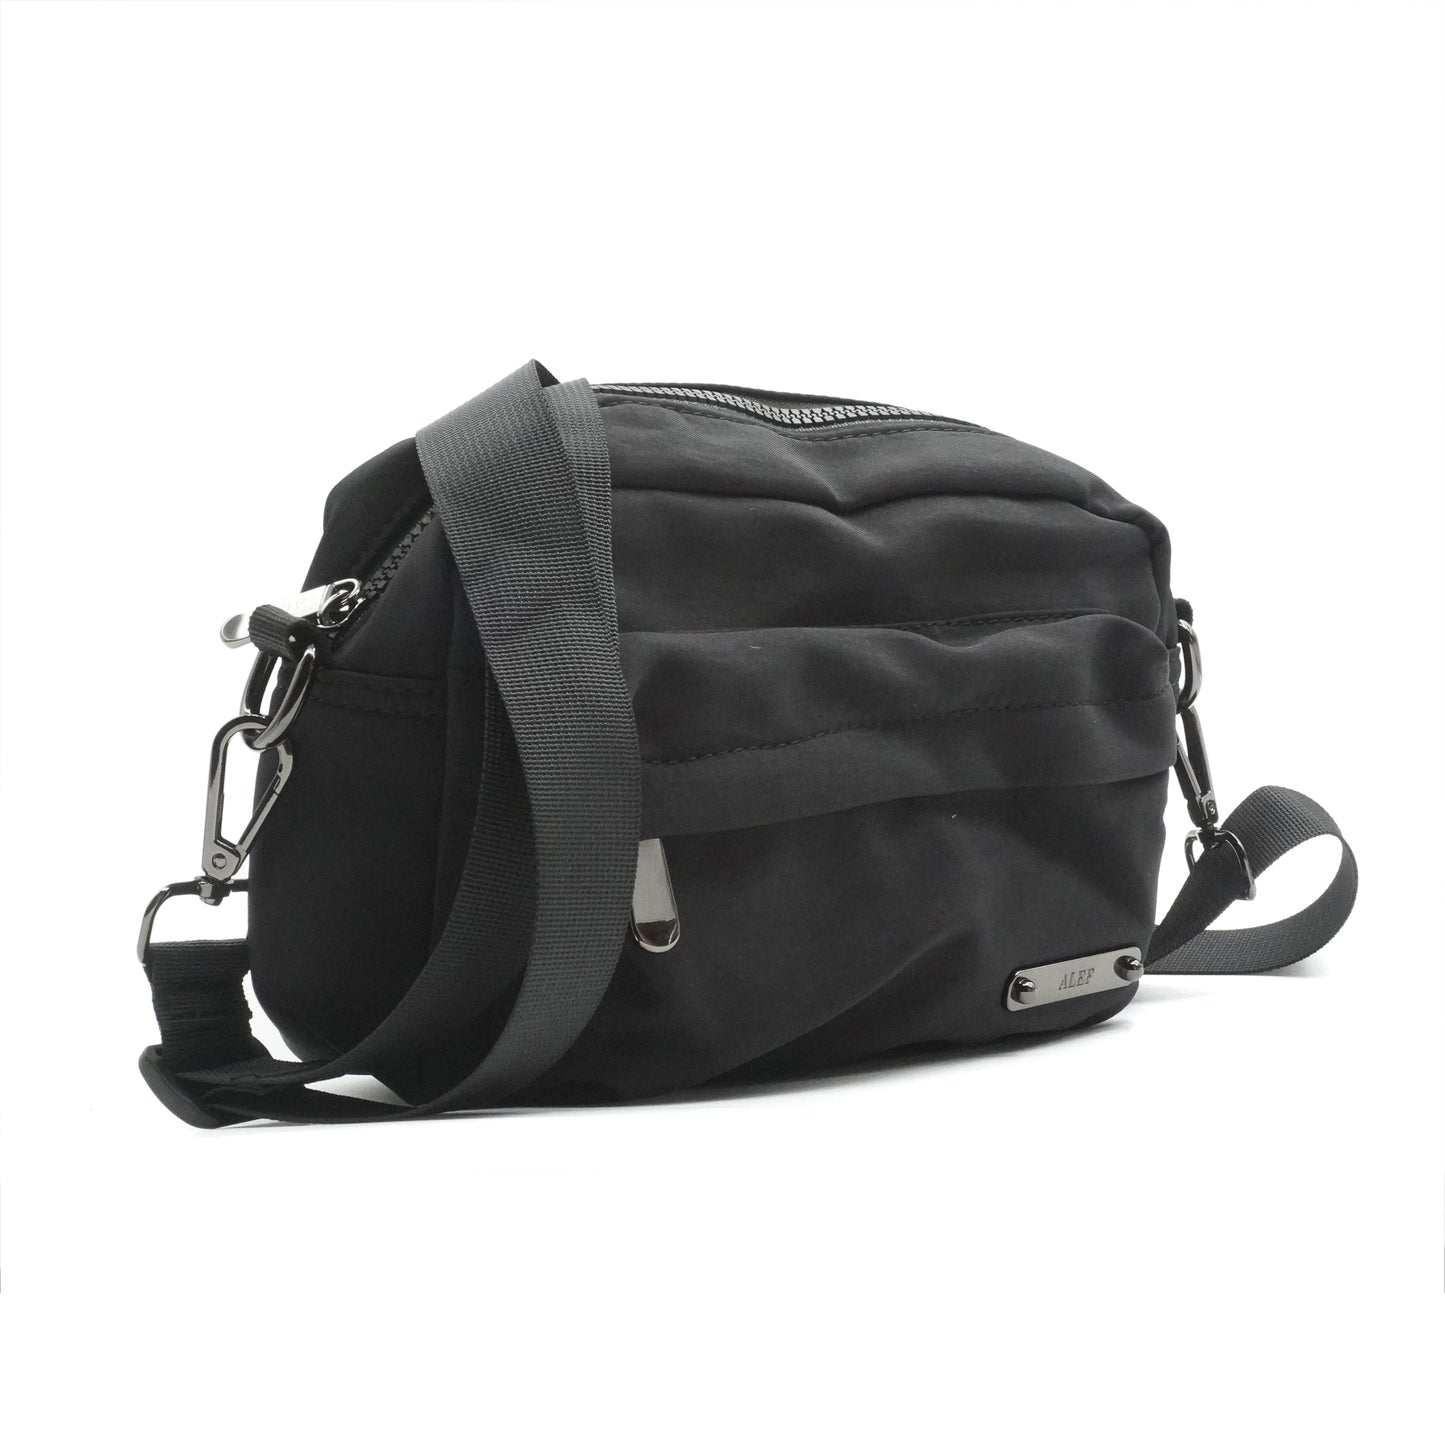 Alef Kyoto Men's Nylon Shoulder Bag (Black)